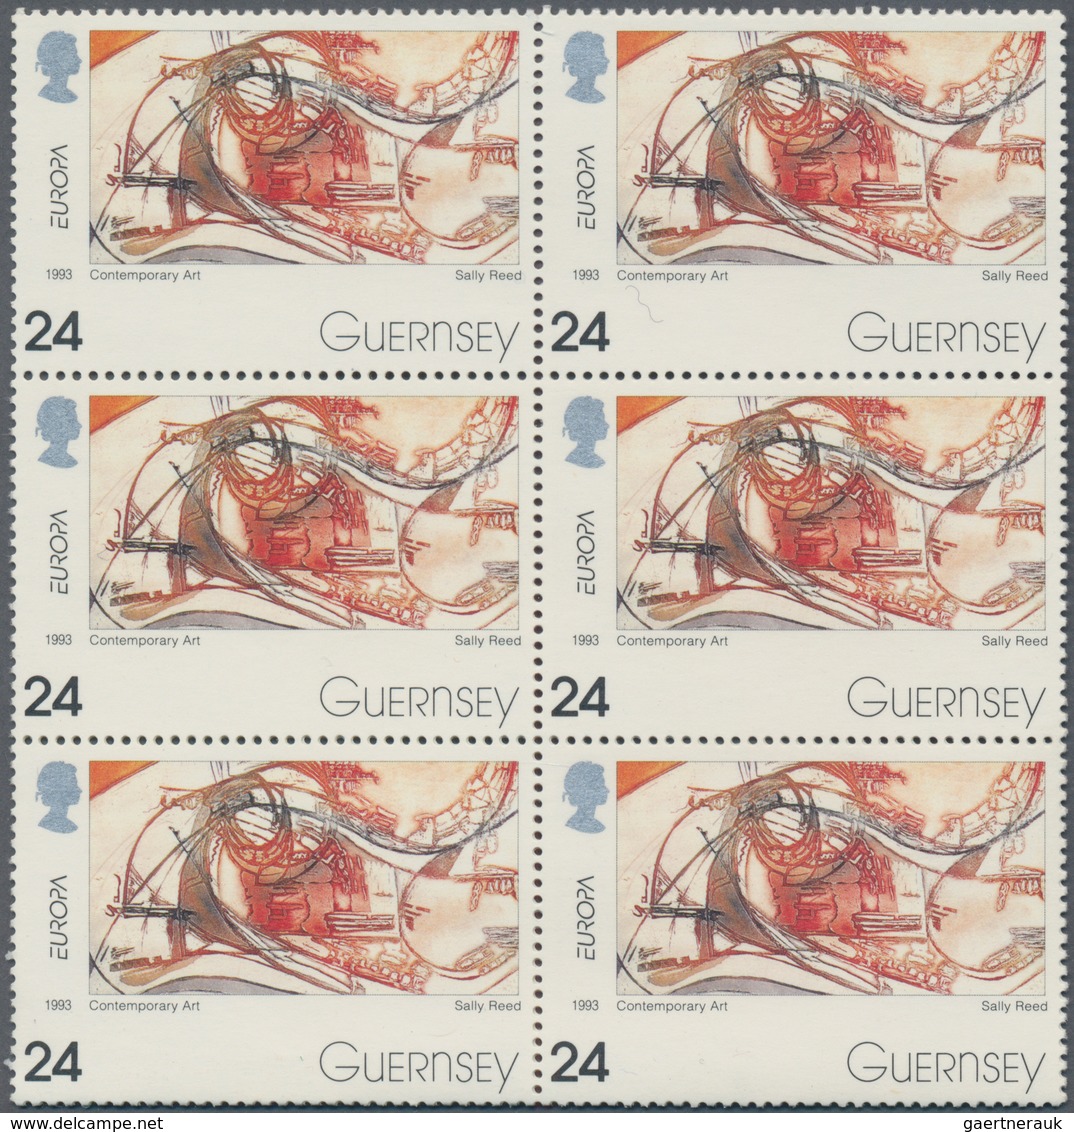 Großbritannien - Kanalinseln: 1978/1997 (ca.), accumulation of Jersey, Guernsey and Isle of Man with